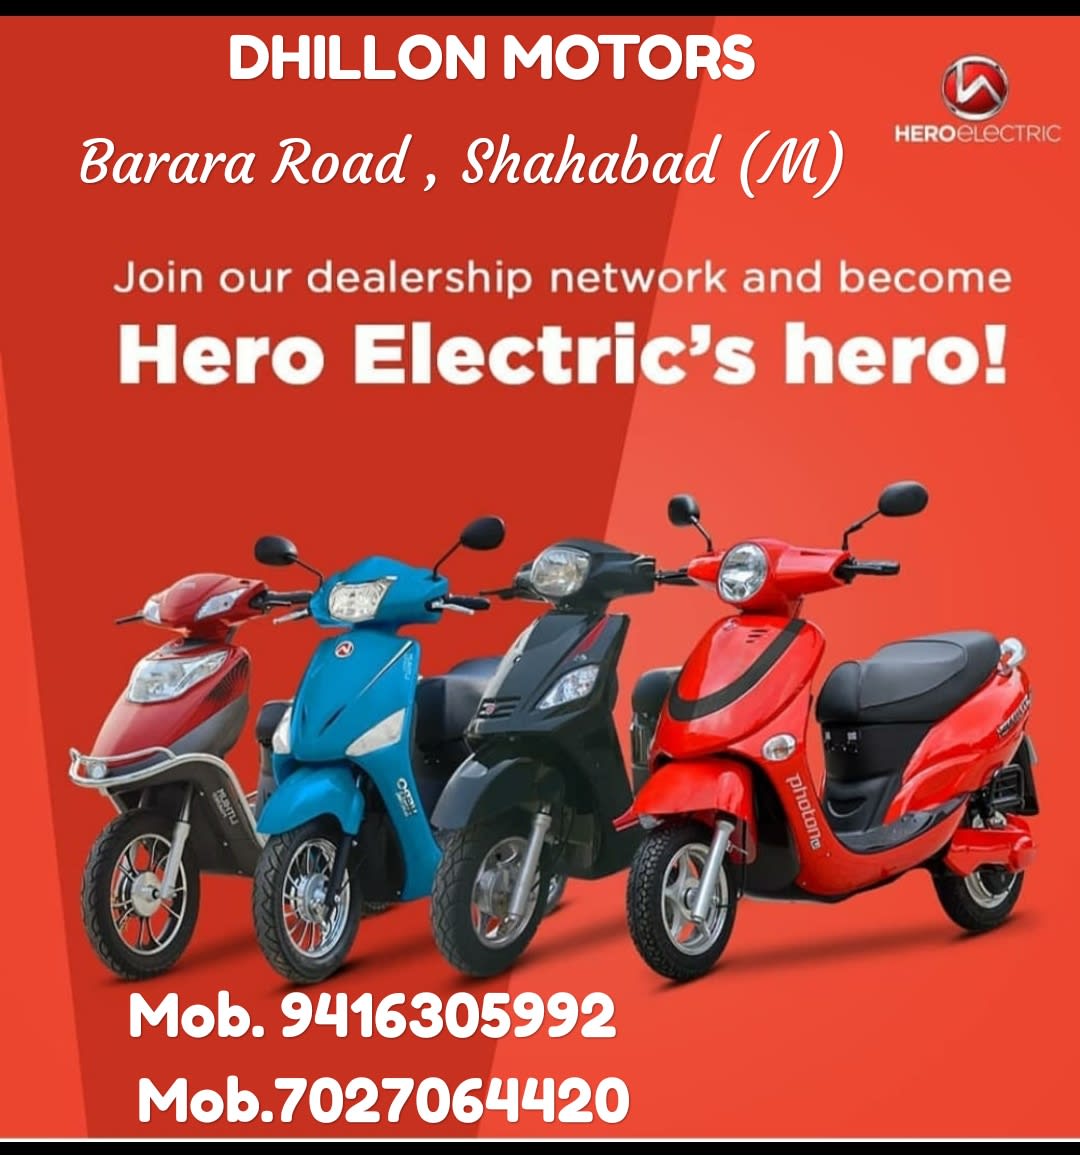 Dhillon Motors